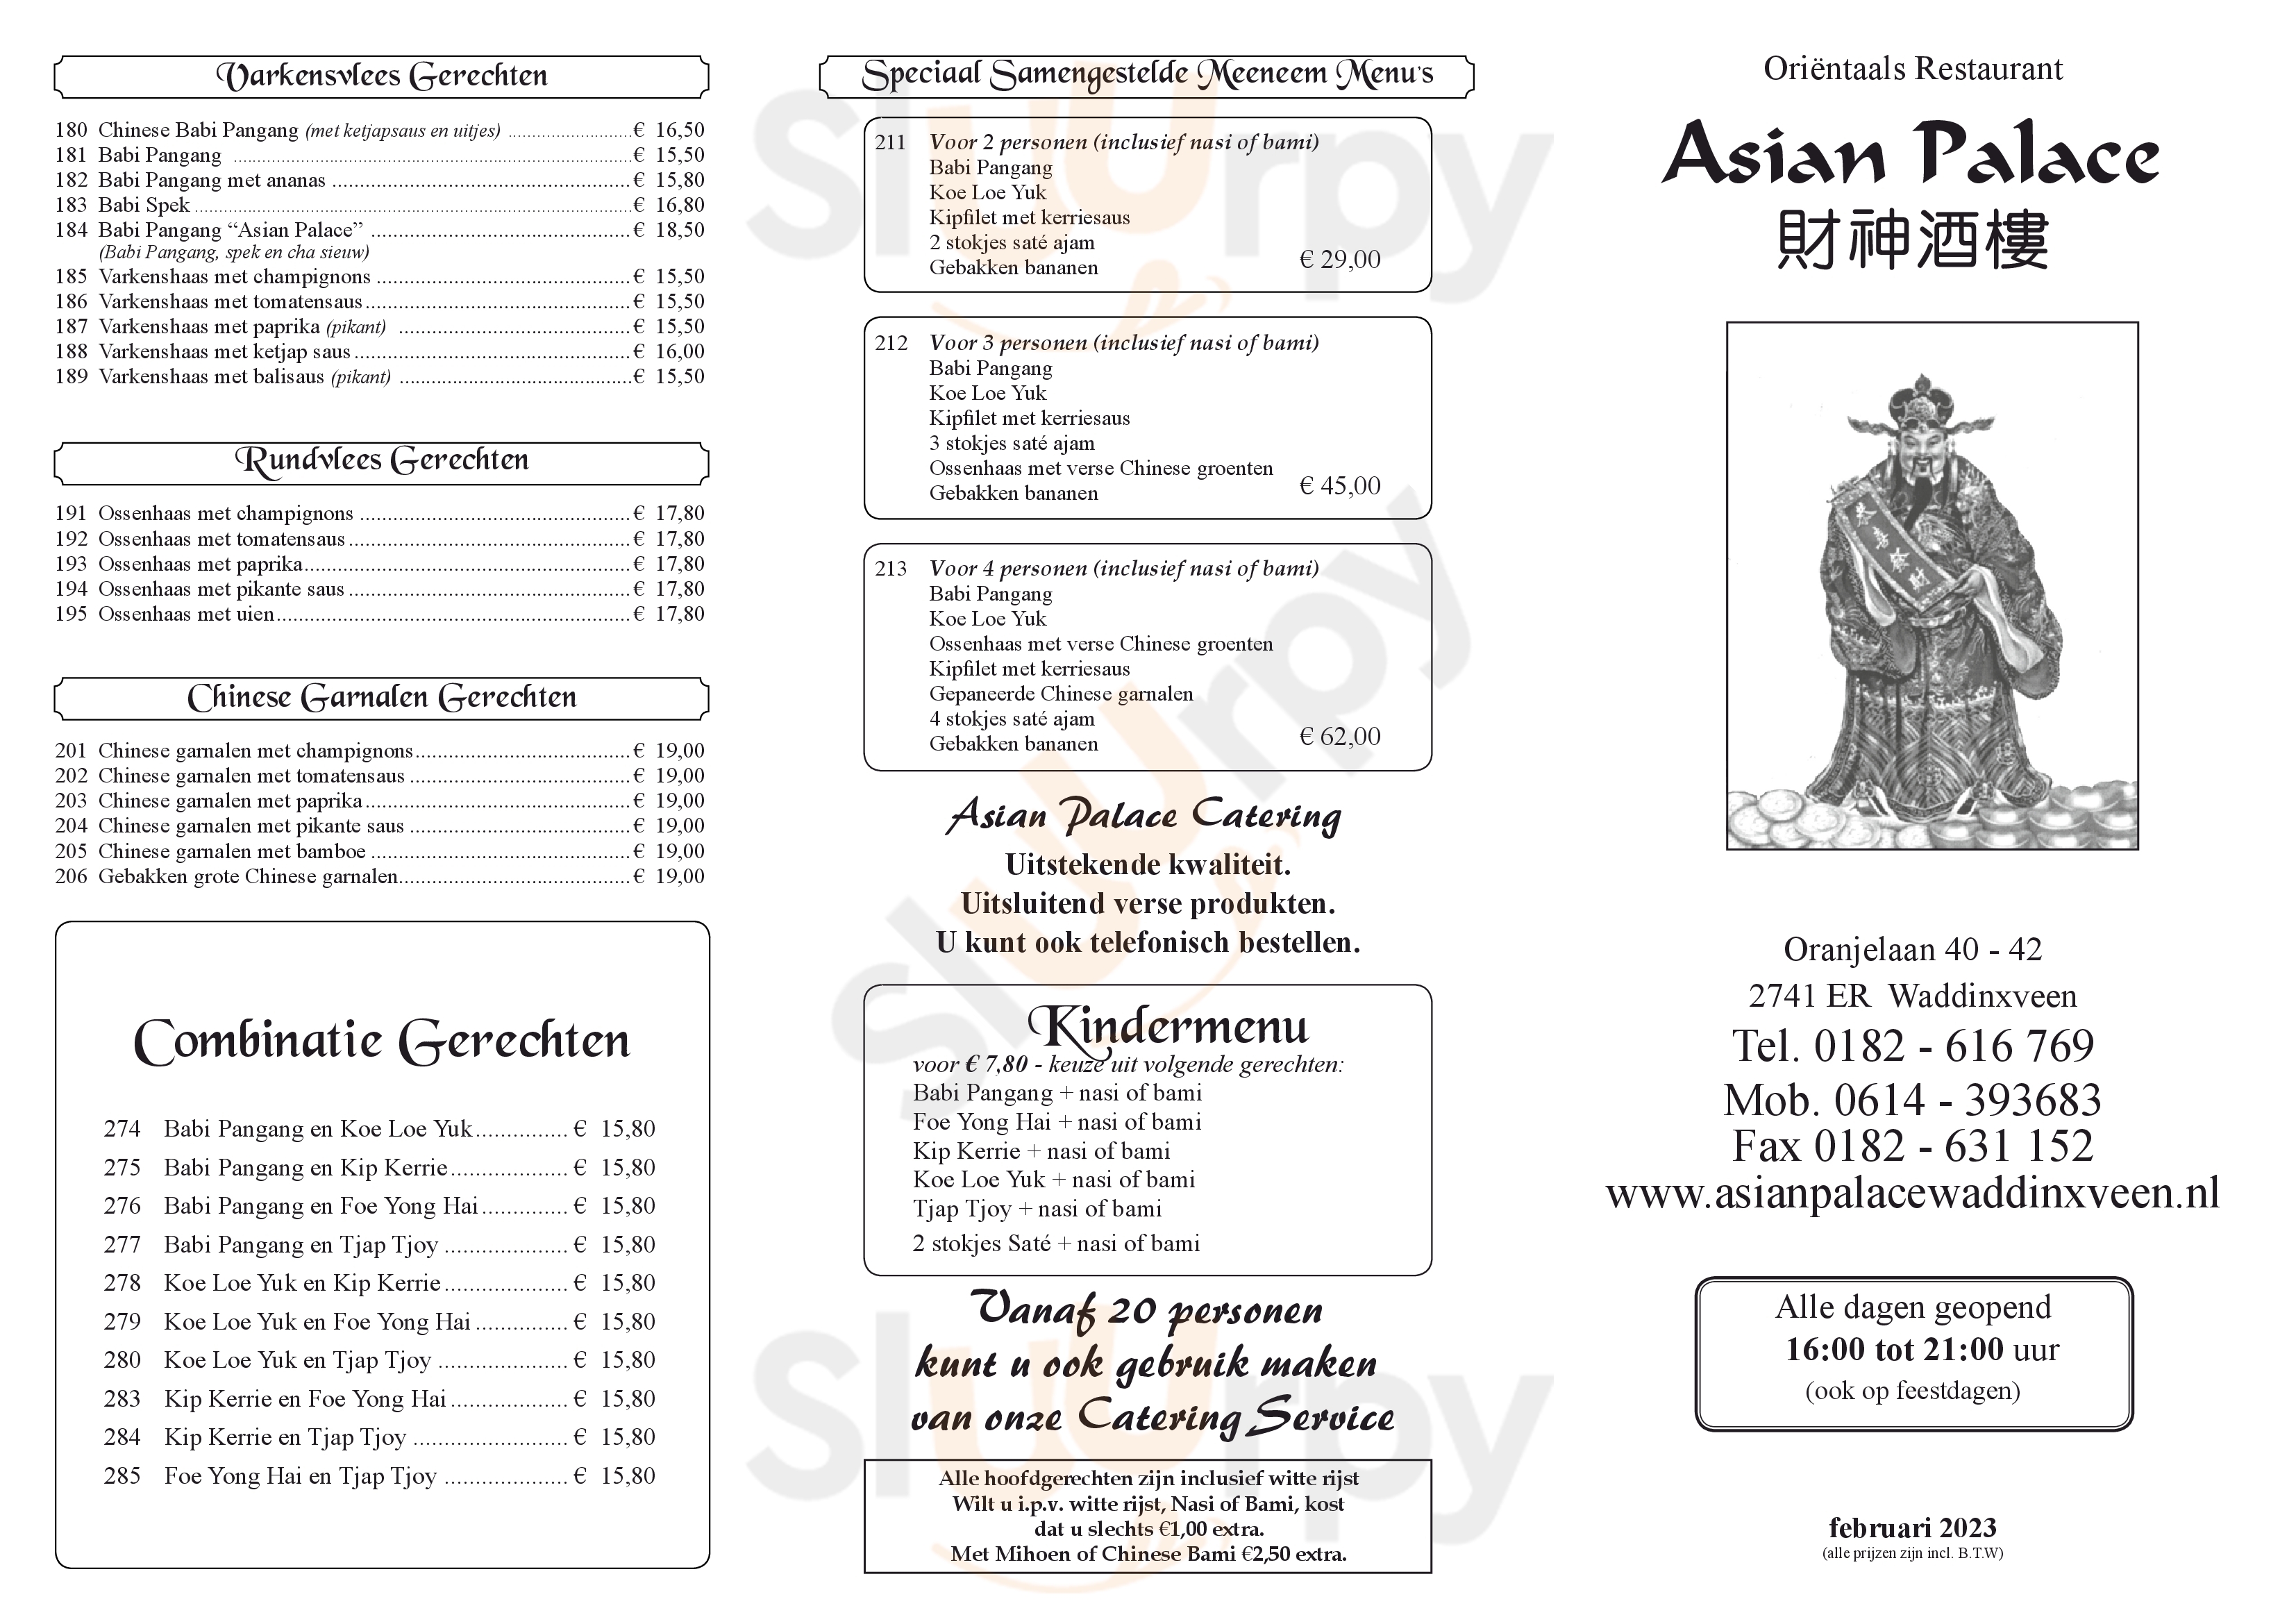 Chinees Indisch Restaurant Asian Palace Waddinxveen Menu - 1